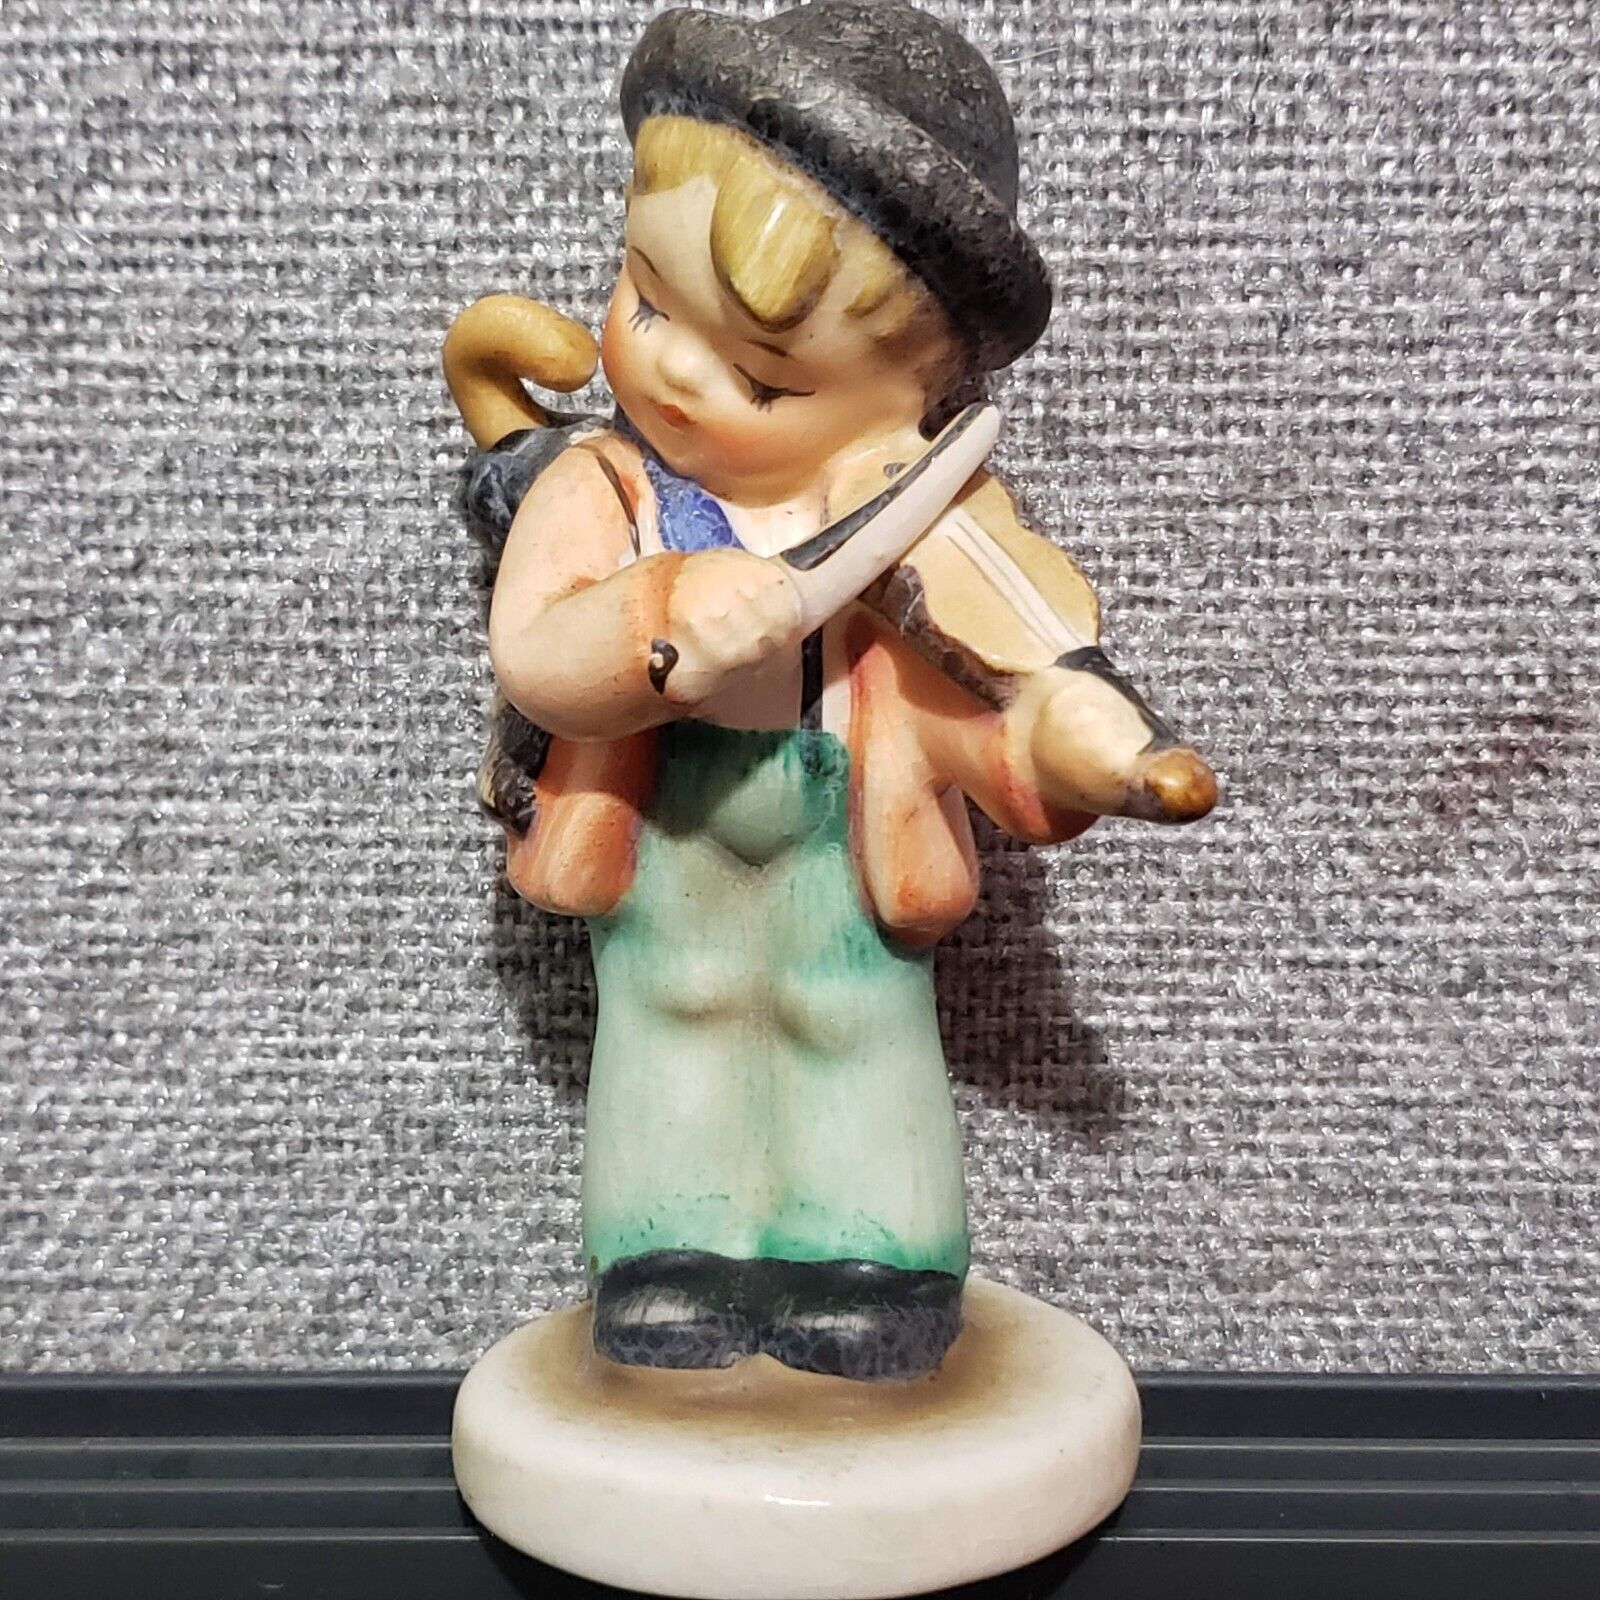 Vtg Collectible Napco Hummel Look Alike The Little Fiddler Figurine  S901